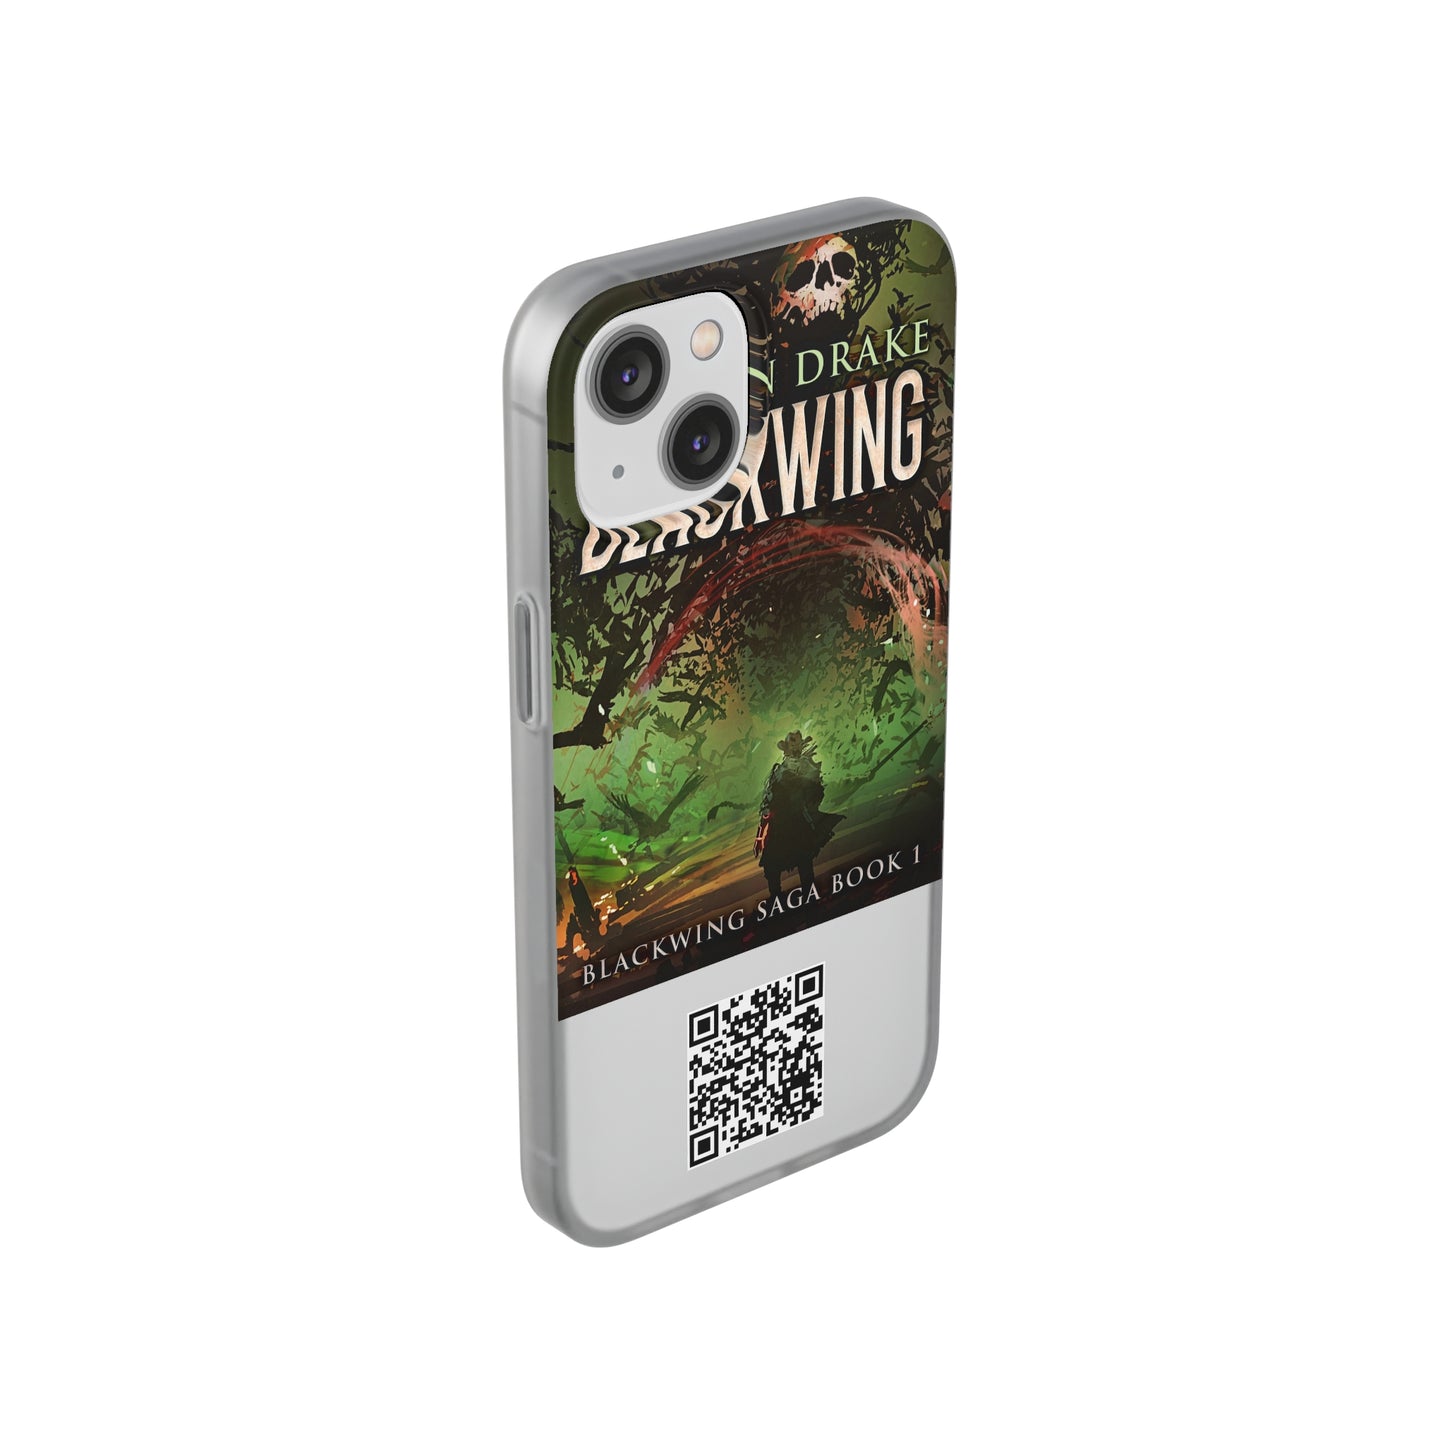 Blackwing - Flexible Phone Case